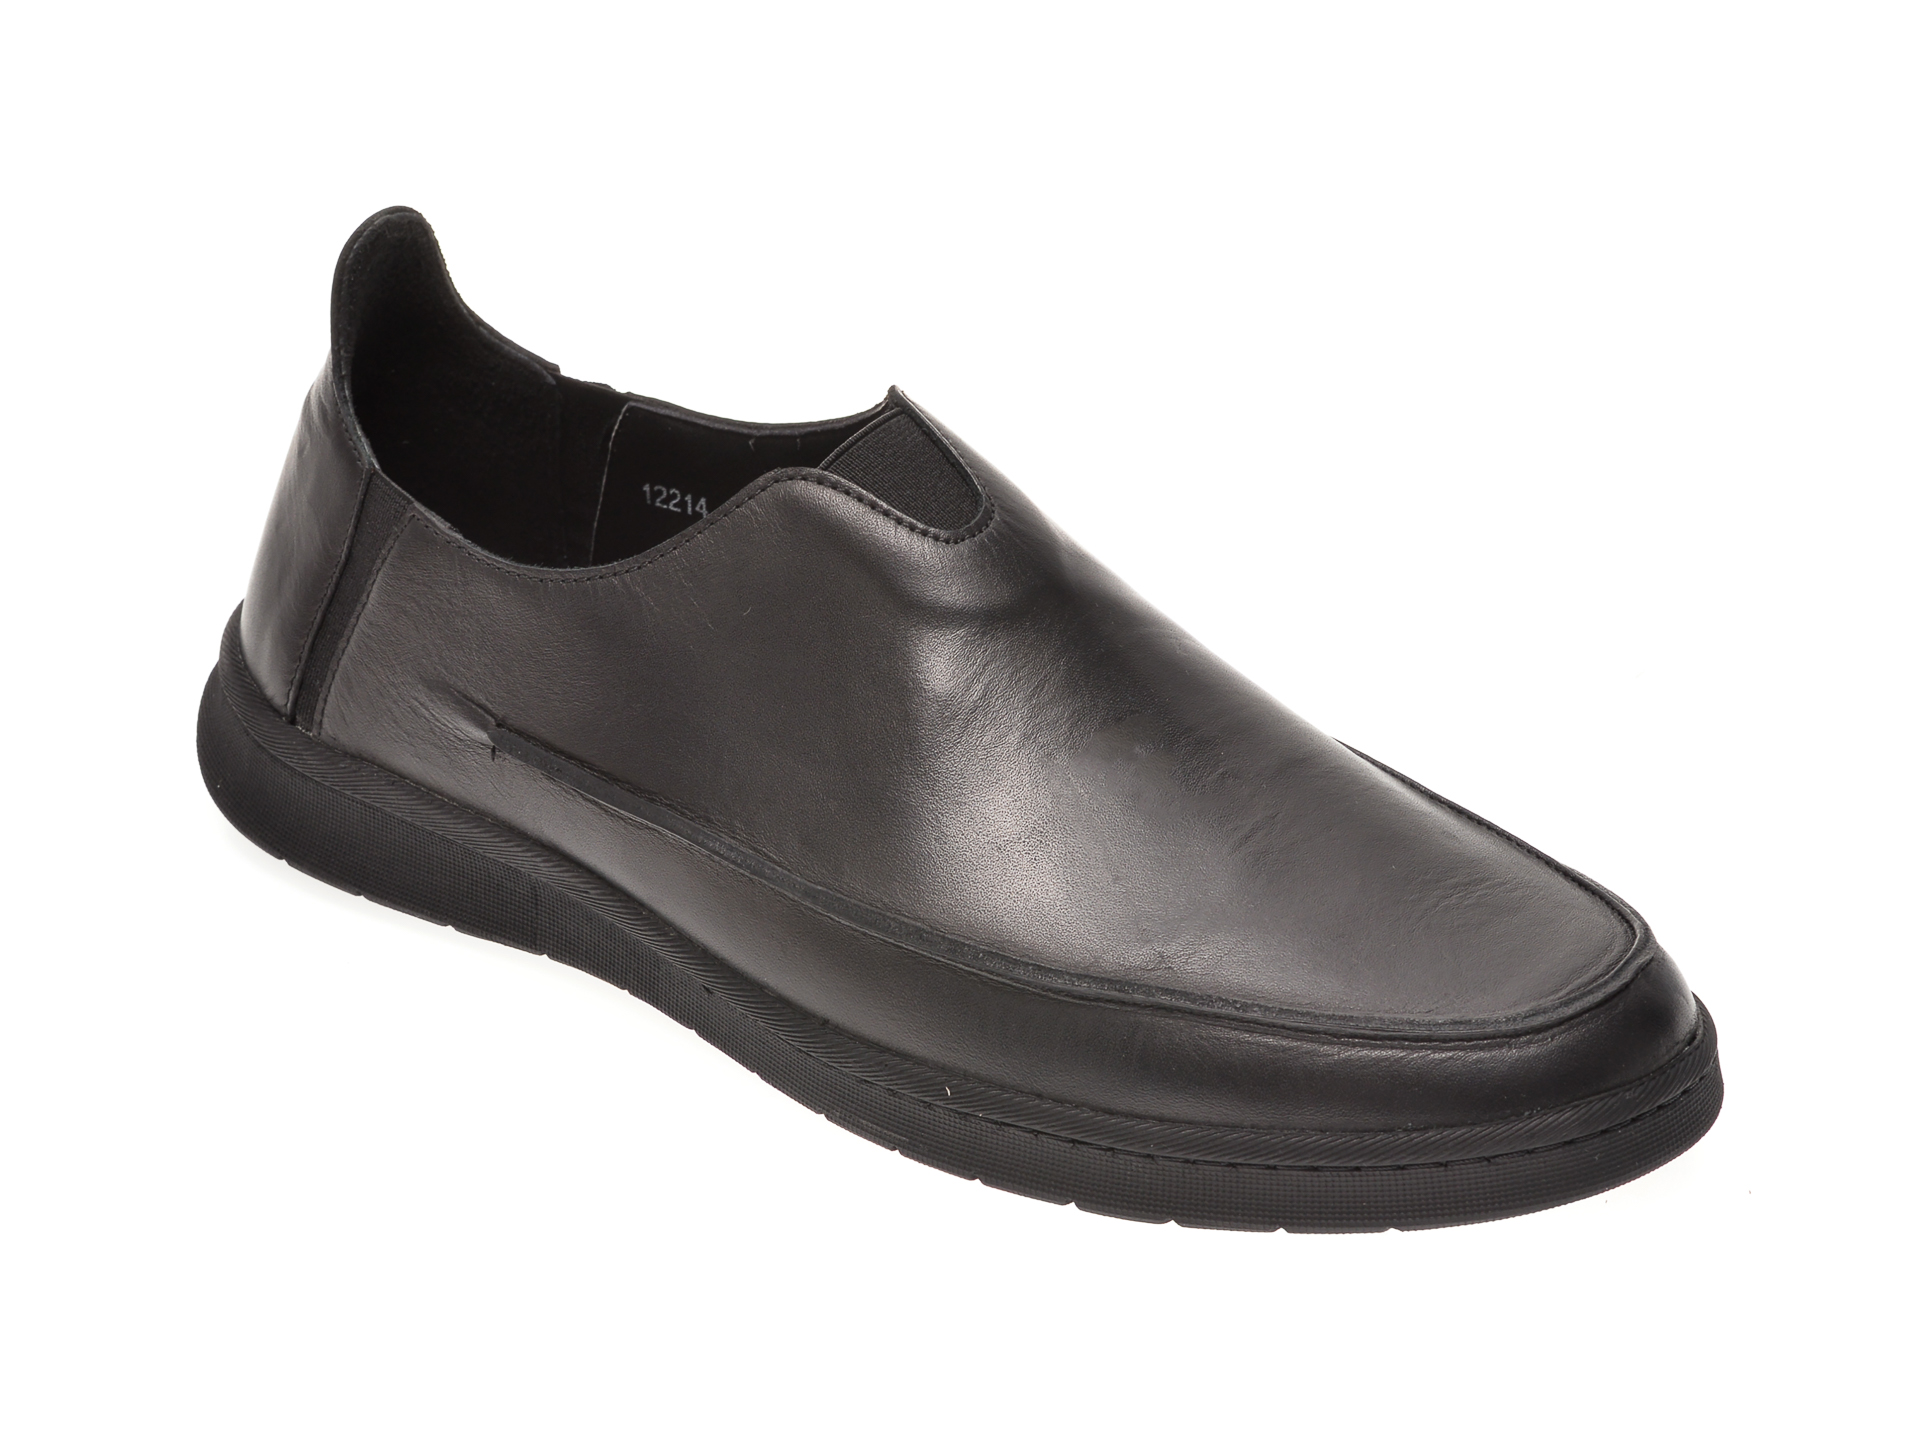 Pantofi OTTER negri, 12214, din piele naturala imagine